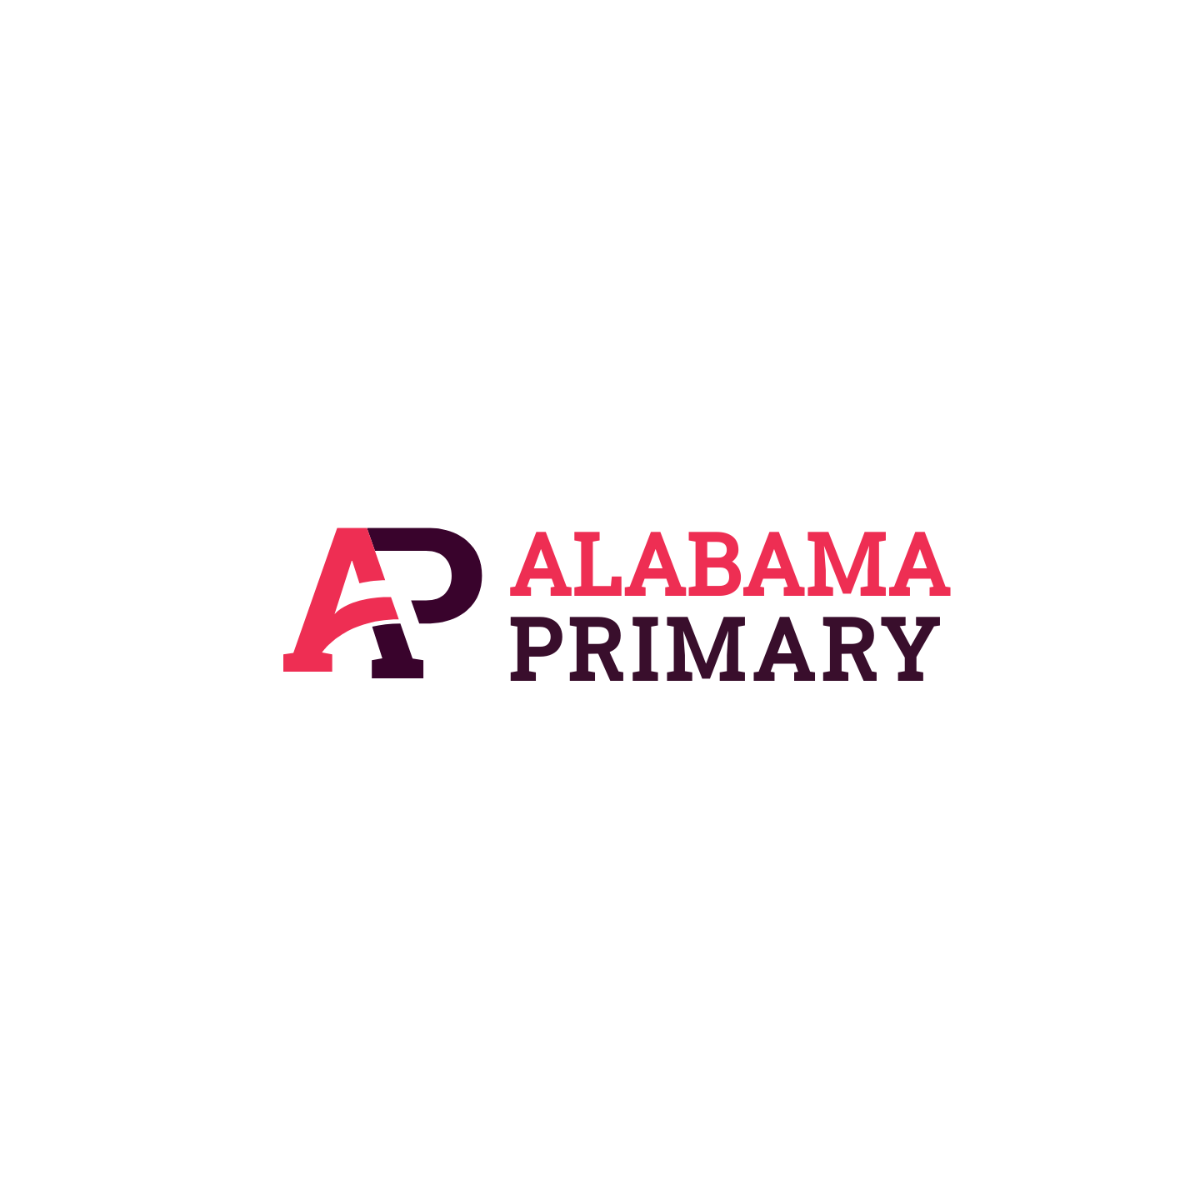 Alabama Primary Logo Template